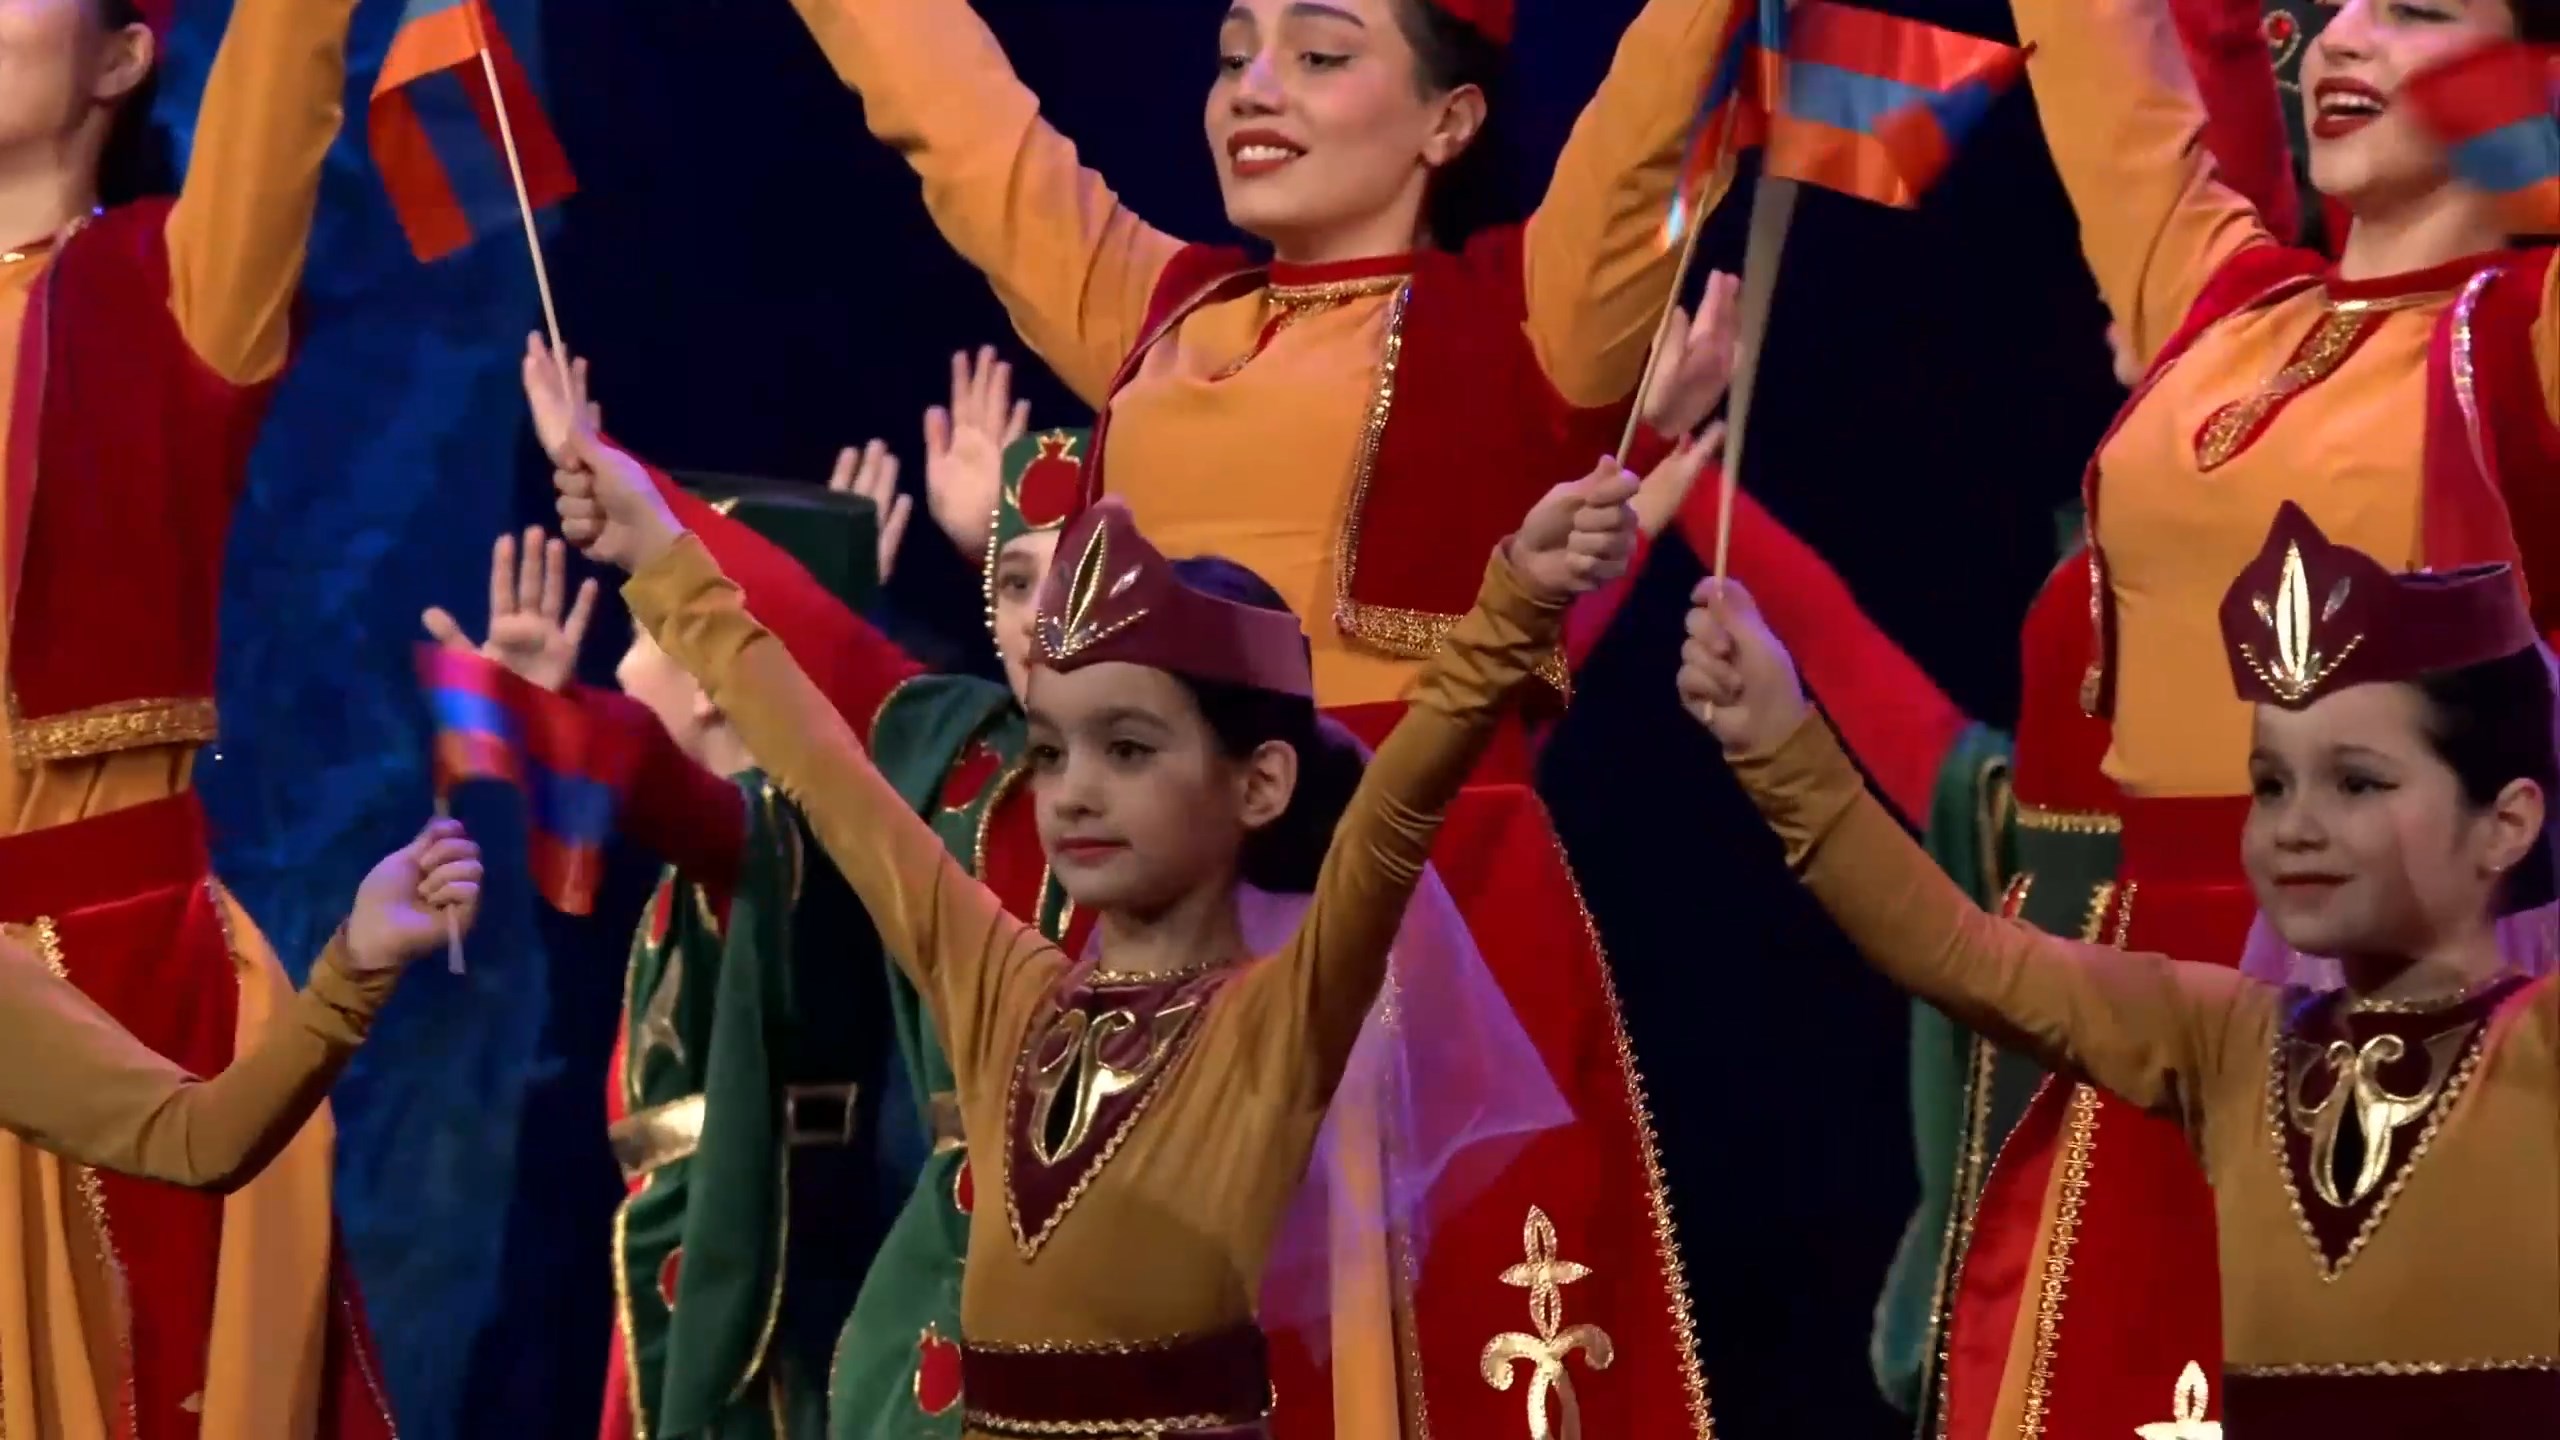 "Армения", Ансамбль «KILIKIA». "Armenia", Ensemble "KILIKIA".